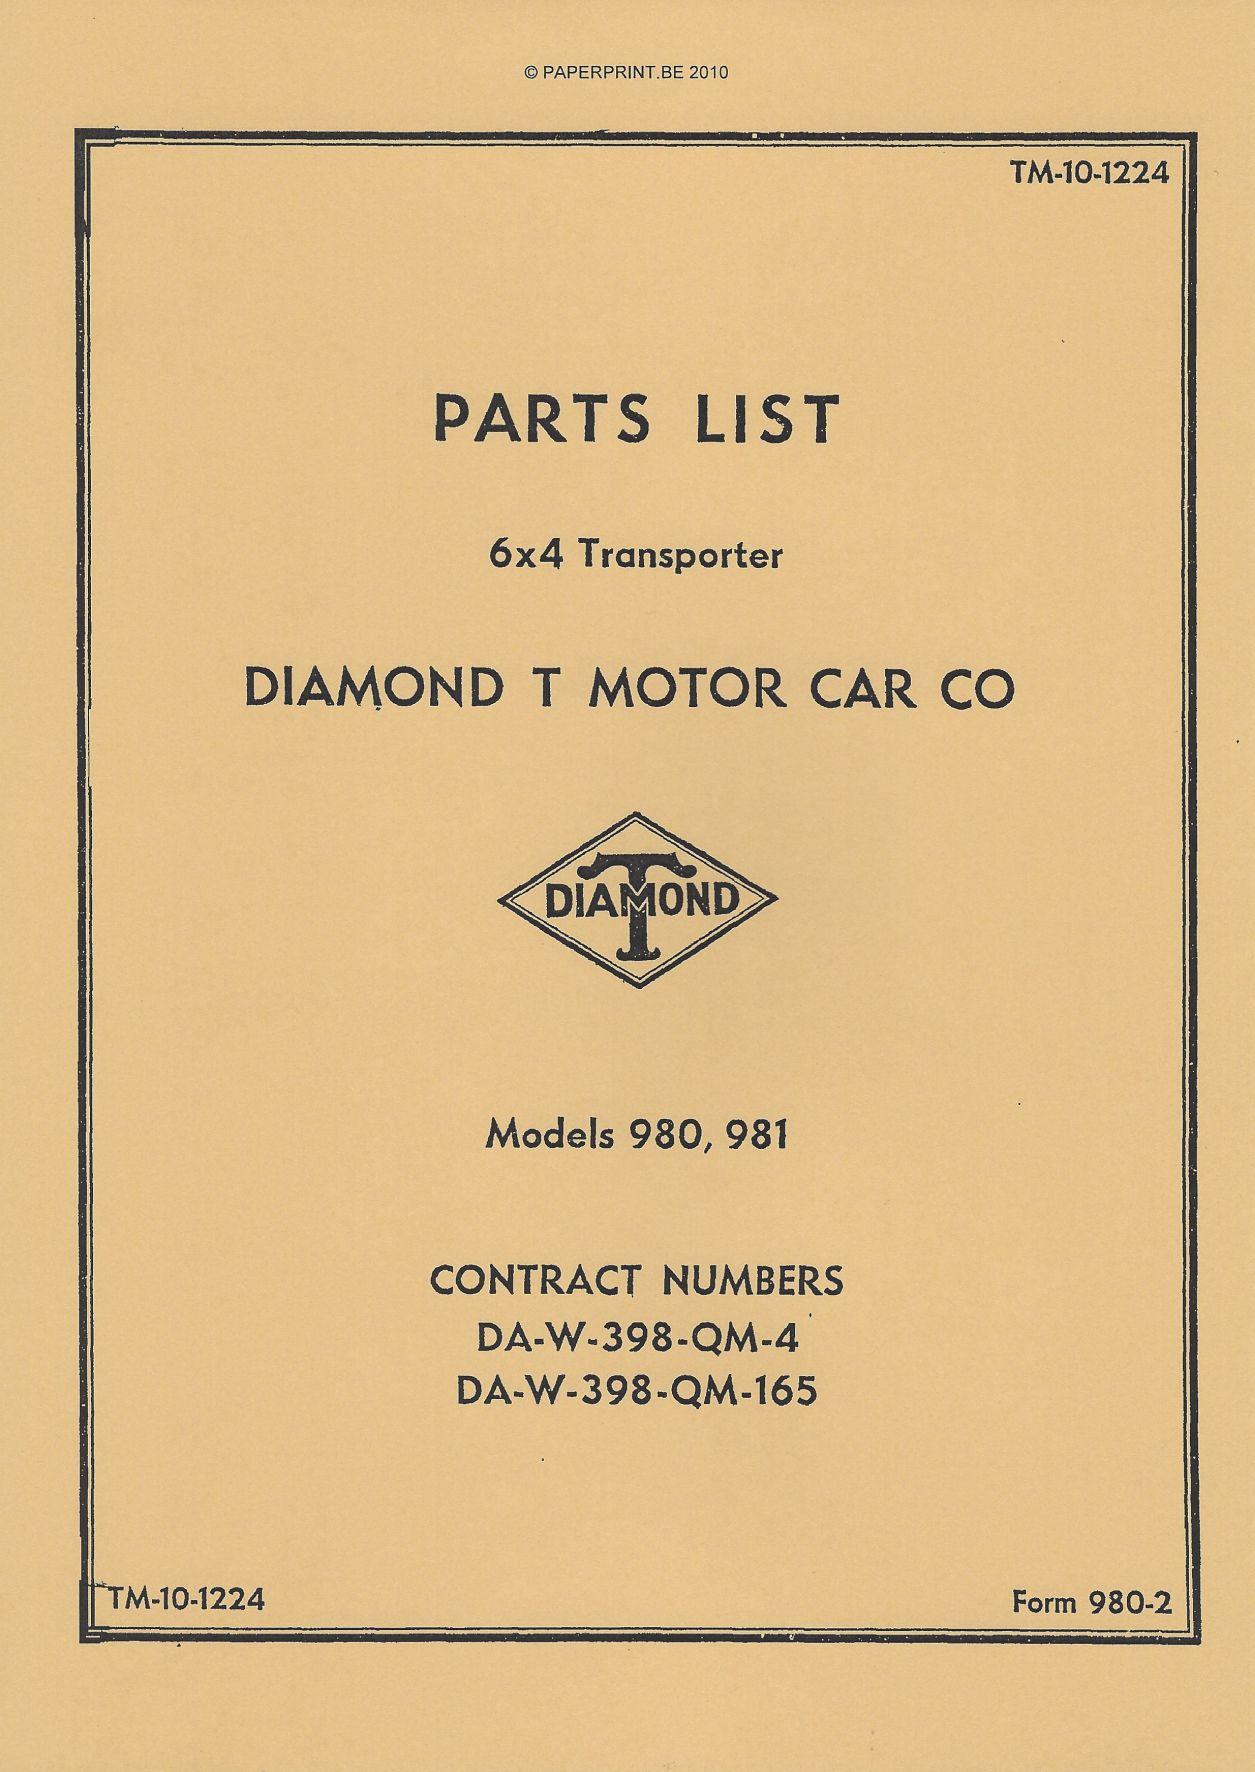 TM 10-1224 US PARTS LIST FOR 6x4 TRANSPORTER DIAMOND T MOTOR CAR CO MODELS 980, 981